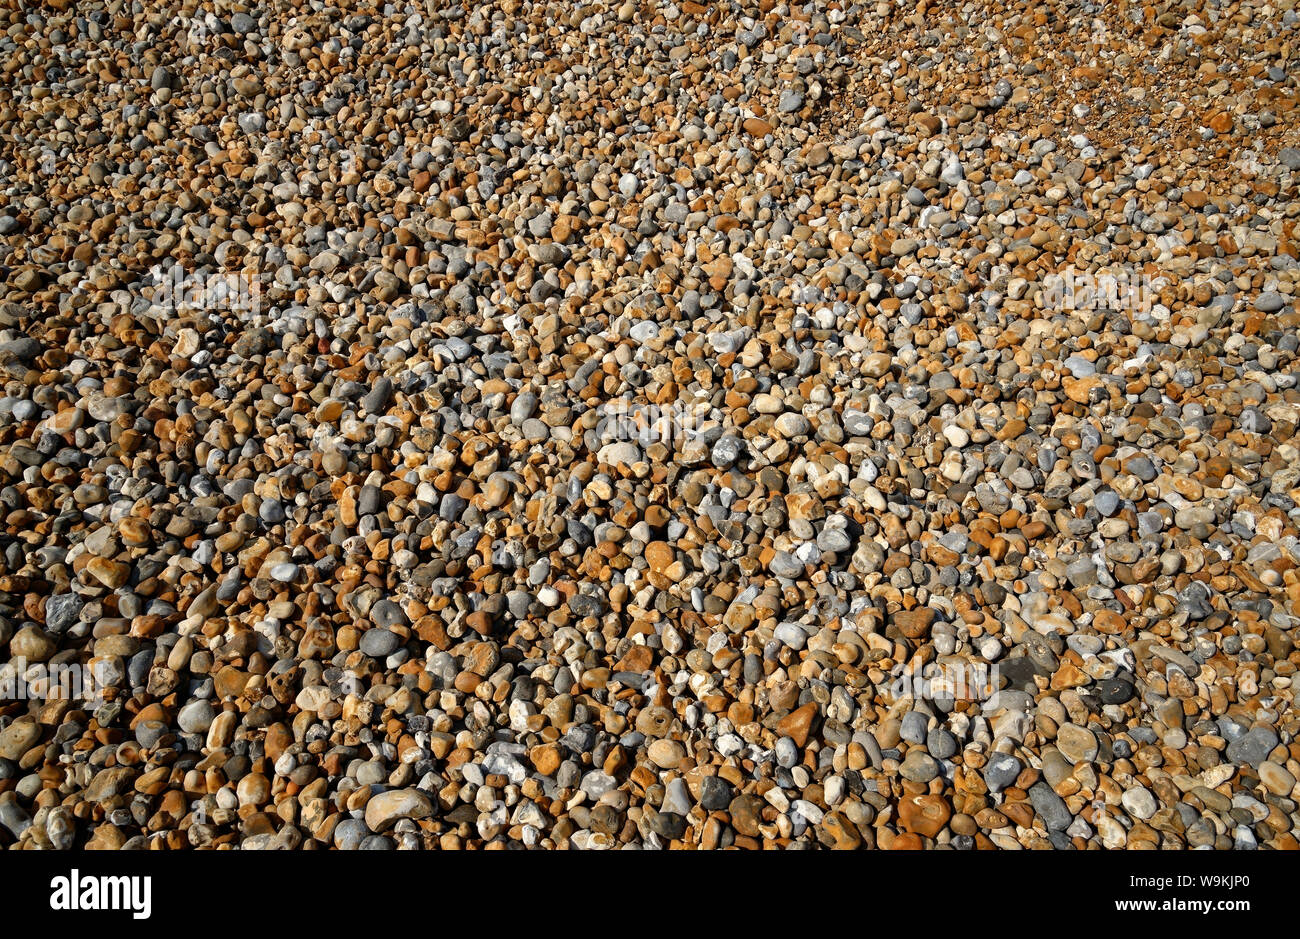 Pebble beach background image. Stock Photo